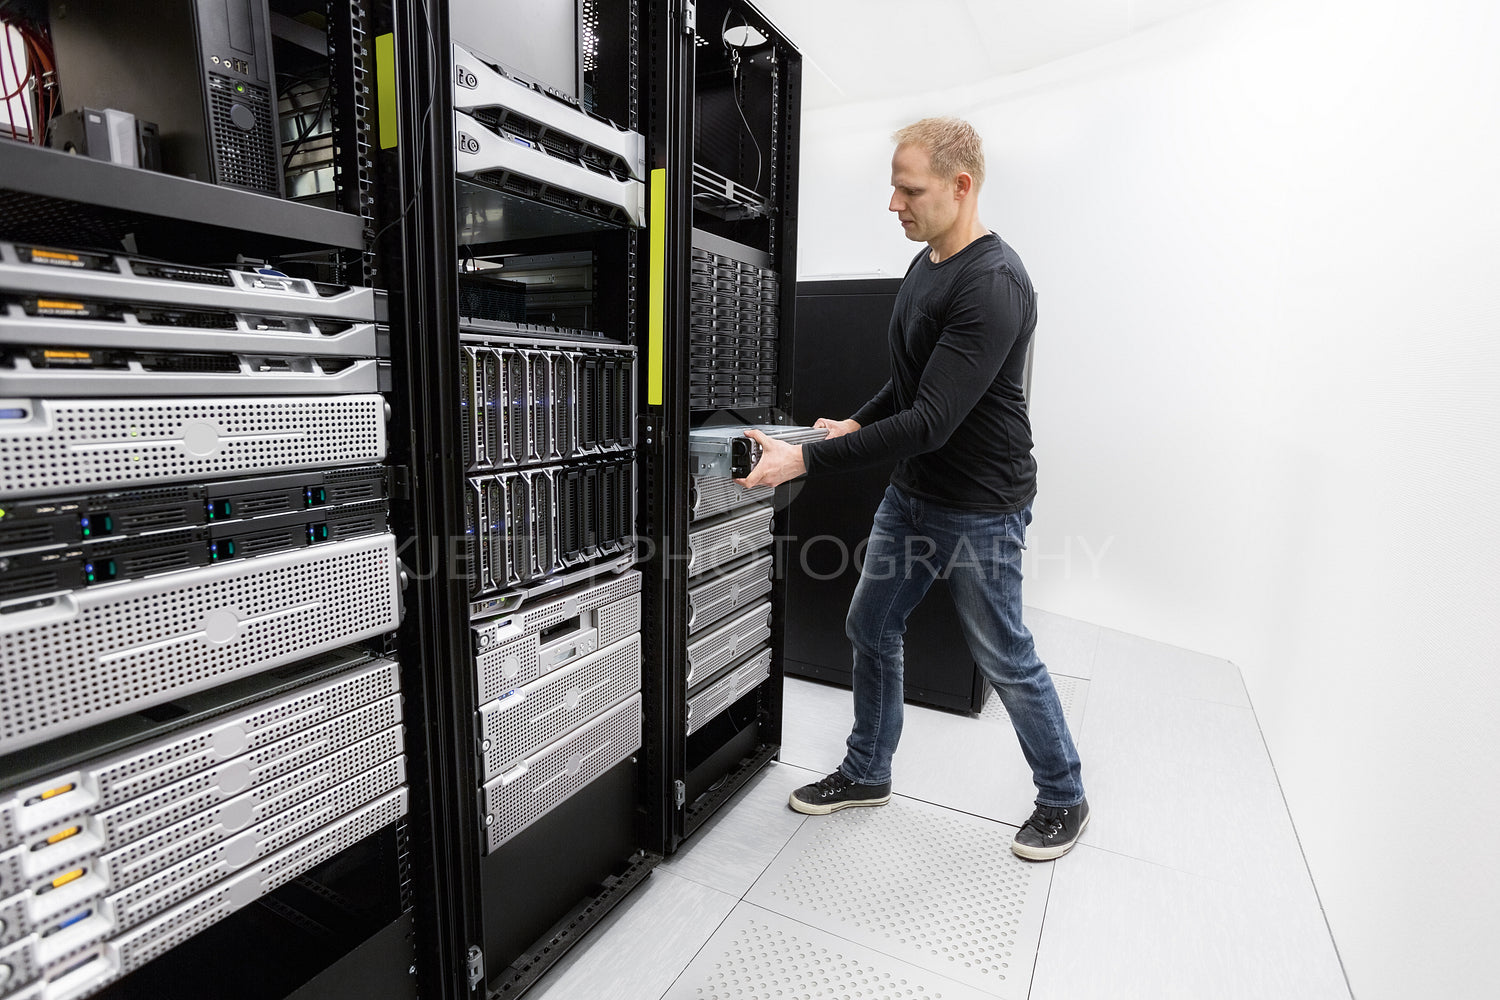 It professional install rack server in datacenter